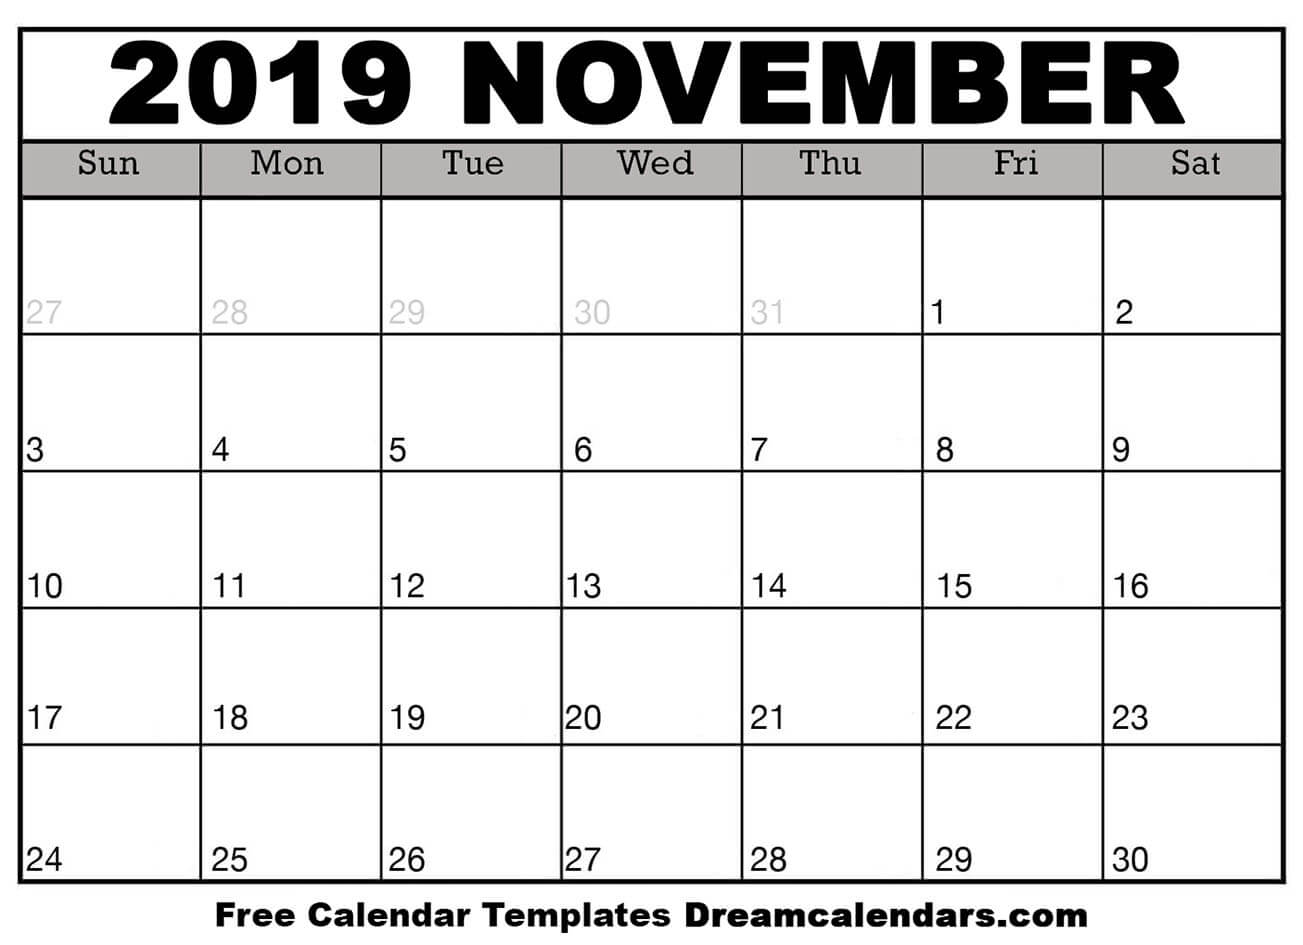 November 2019 calendar free blank printable templates